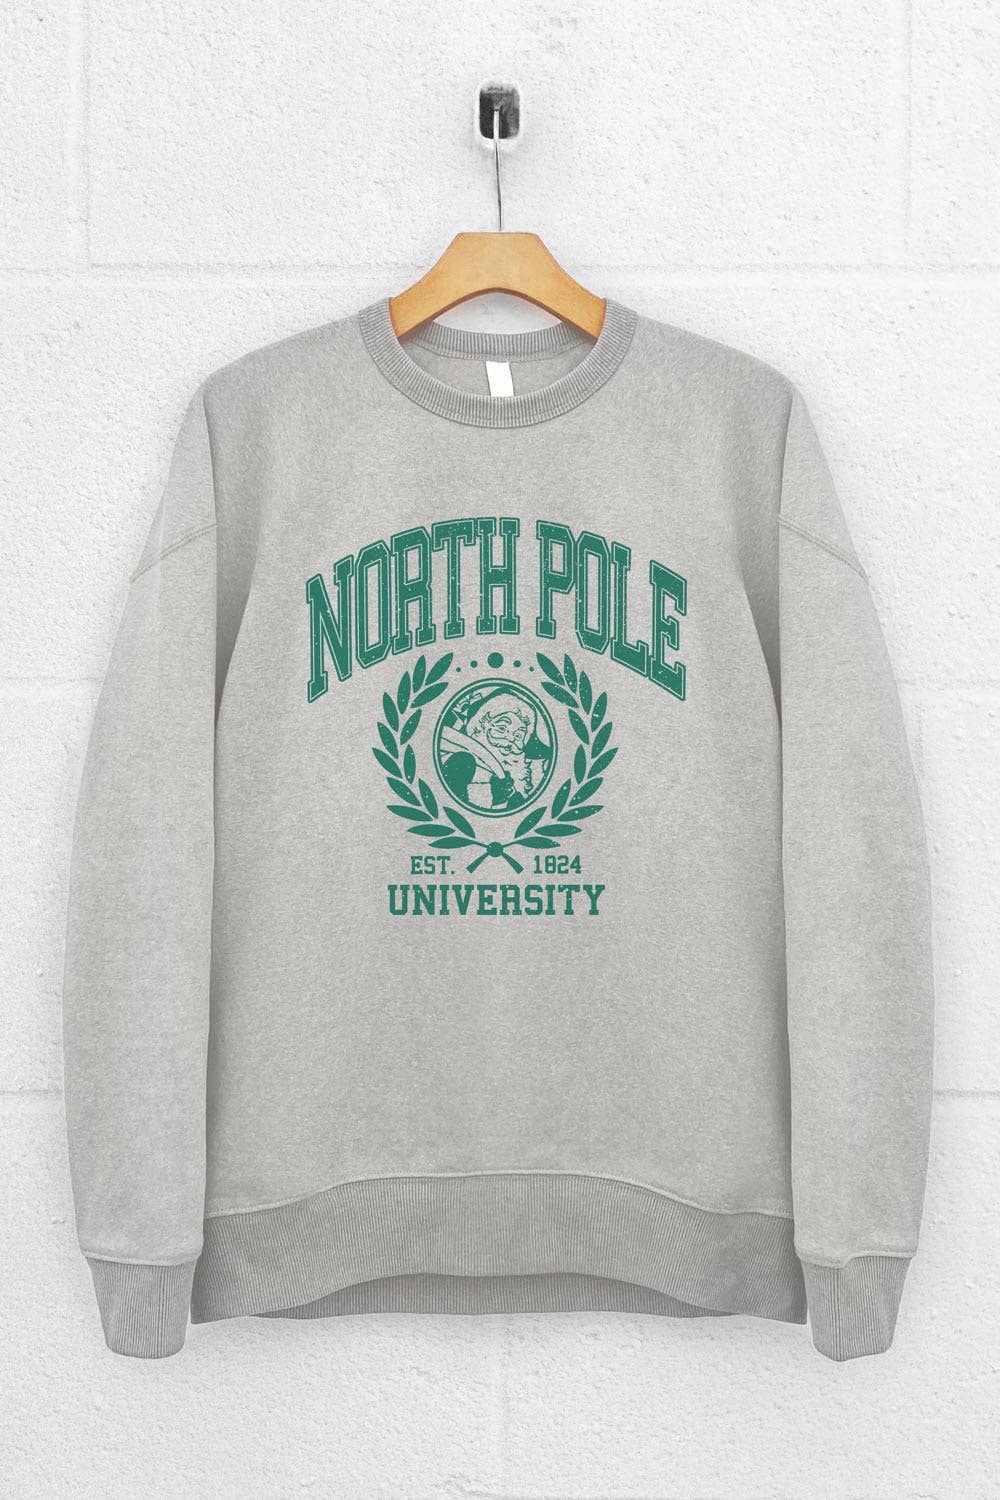 North Pole University Christmas Sweatshirts